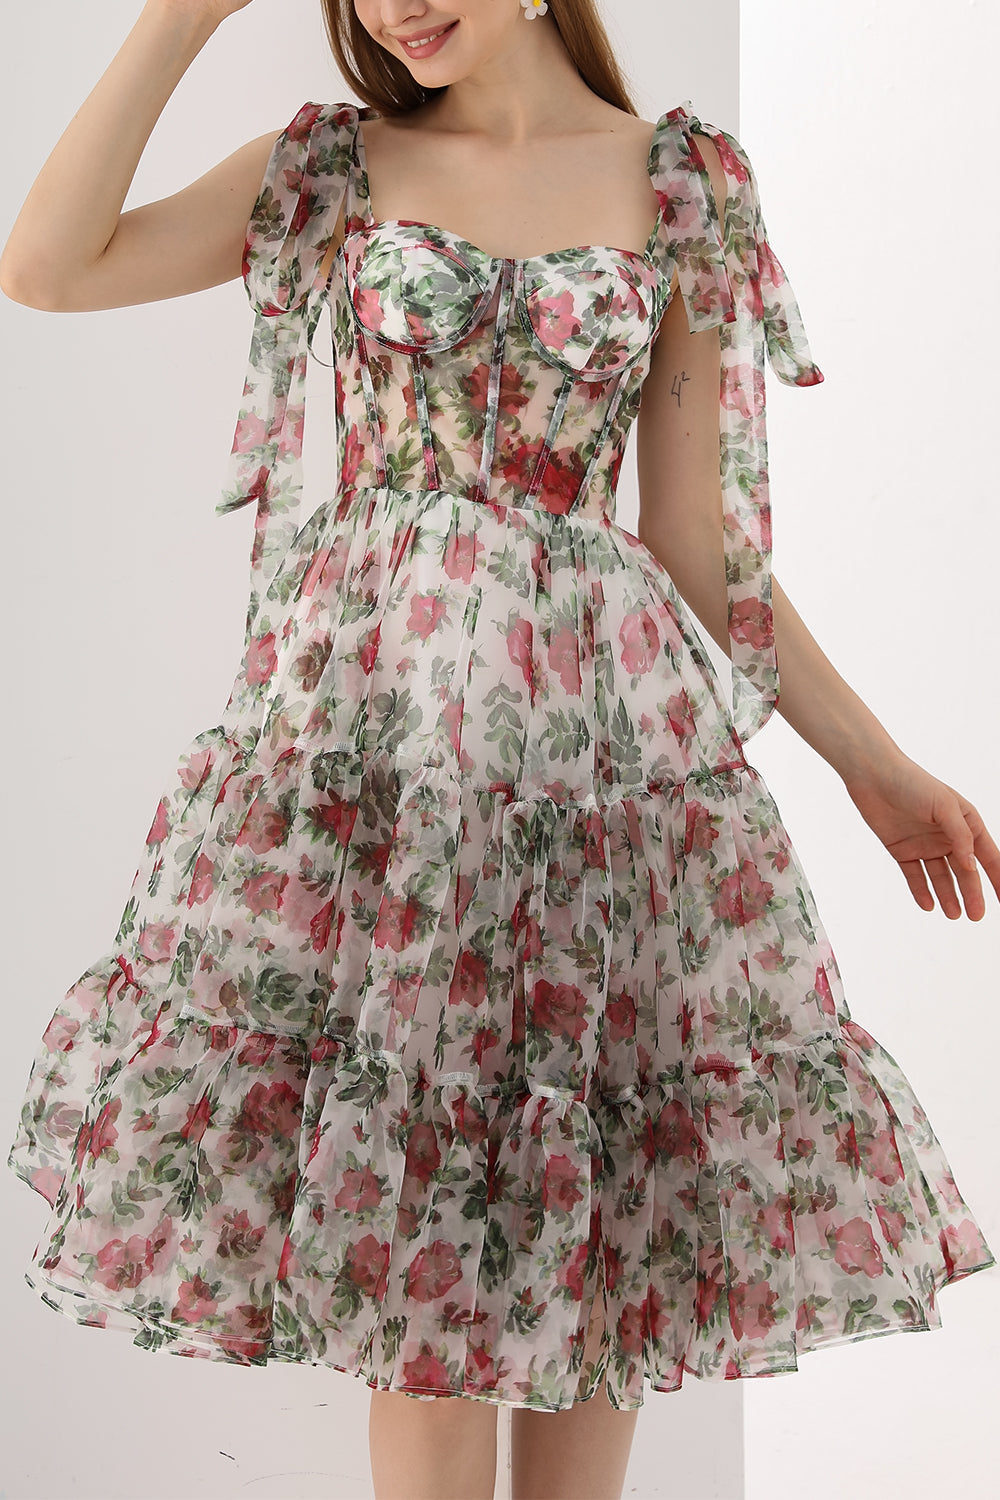 MissJophiel Corset Floral Print Organza Tiered Dress with Tie Straps